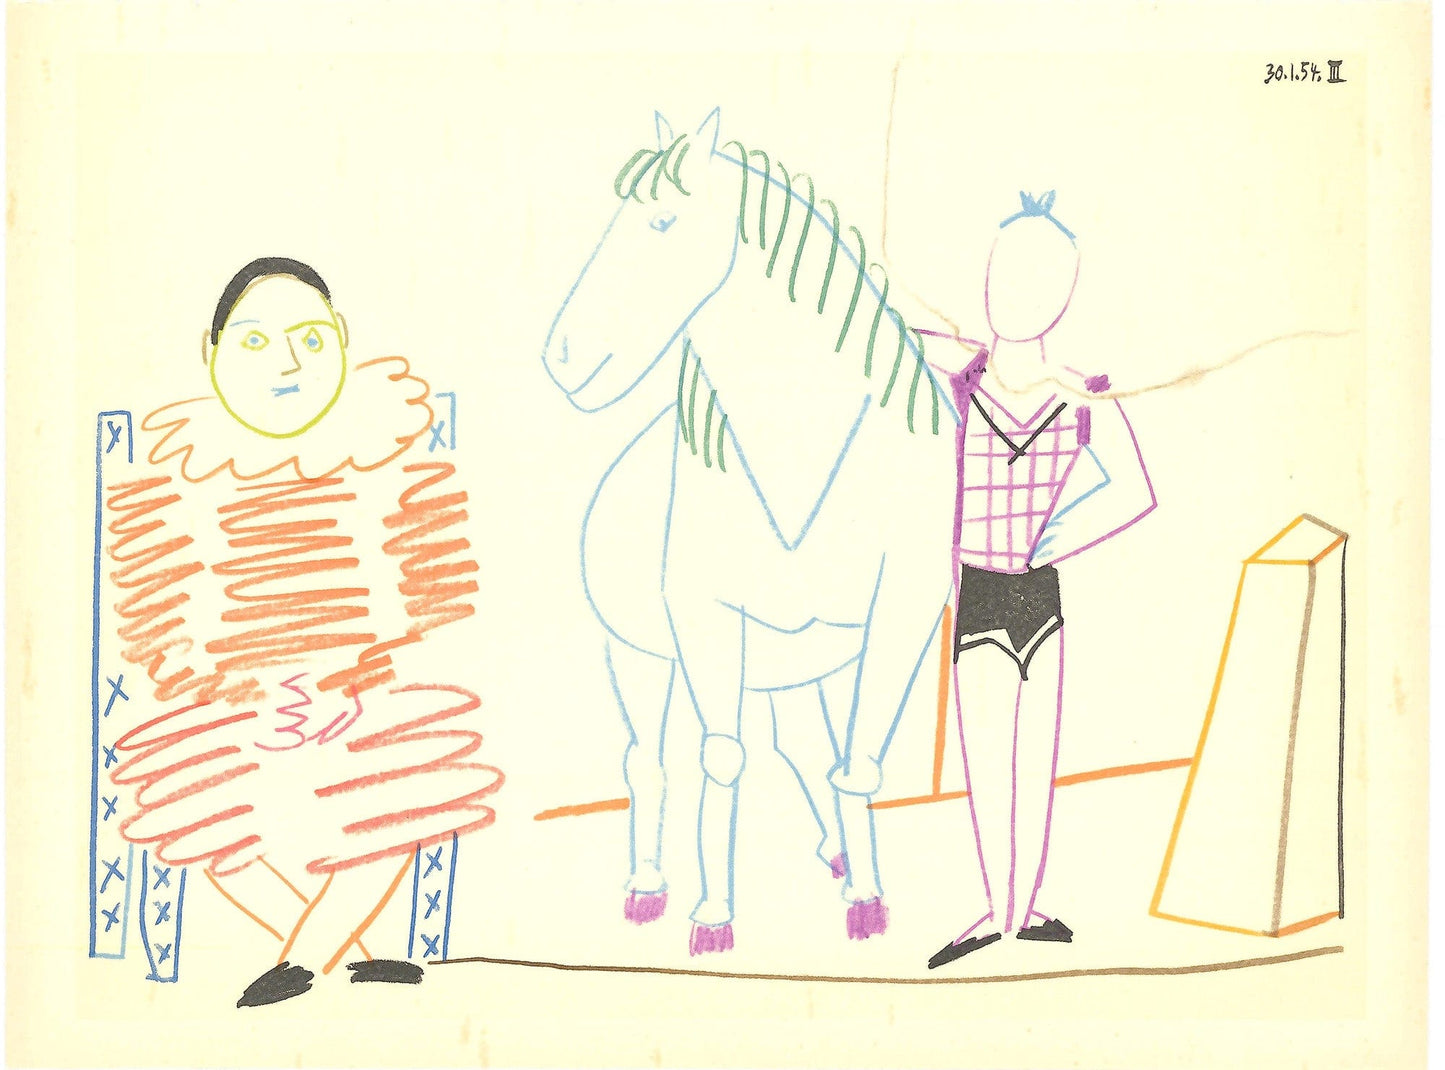 Pablo Picasso "Human Comedy" Verve Edition: Vol. 8 No 29 ZOOM 